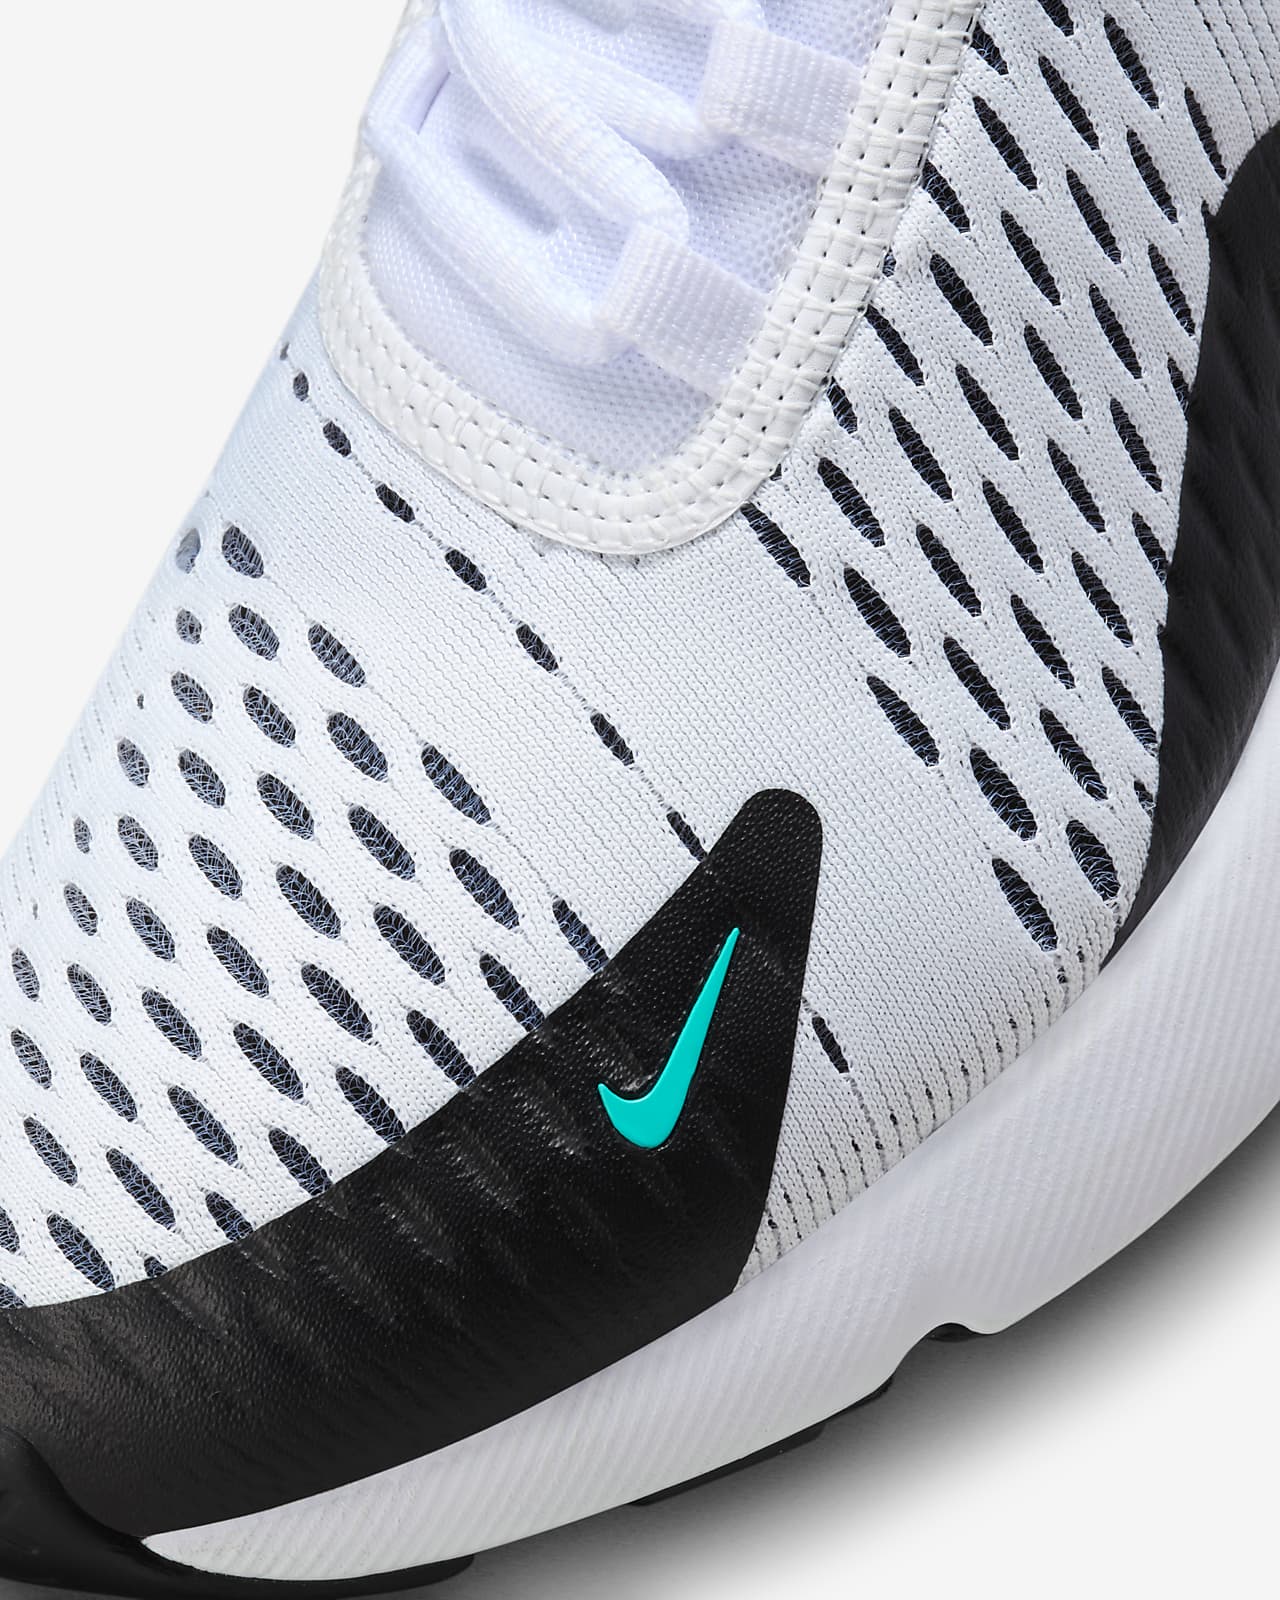 Nike Air Max 270 React Women's Shoe Size 5.5 (White)